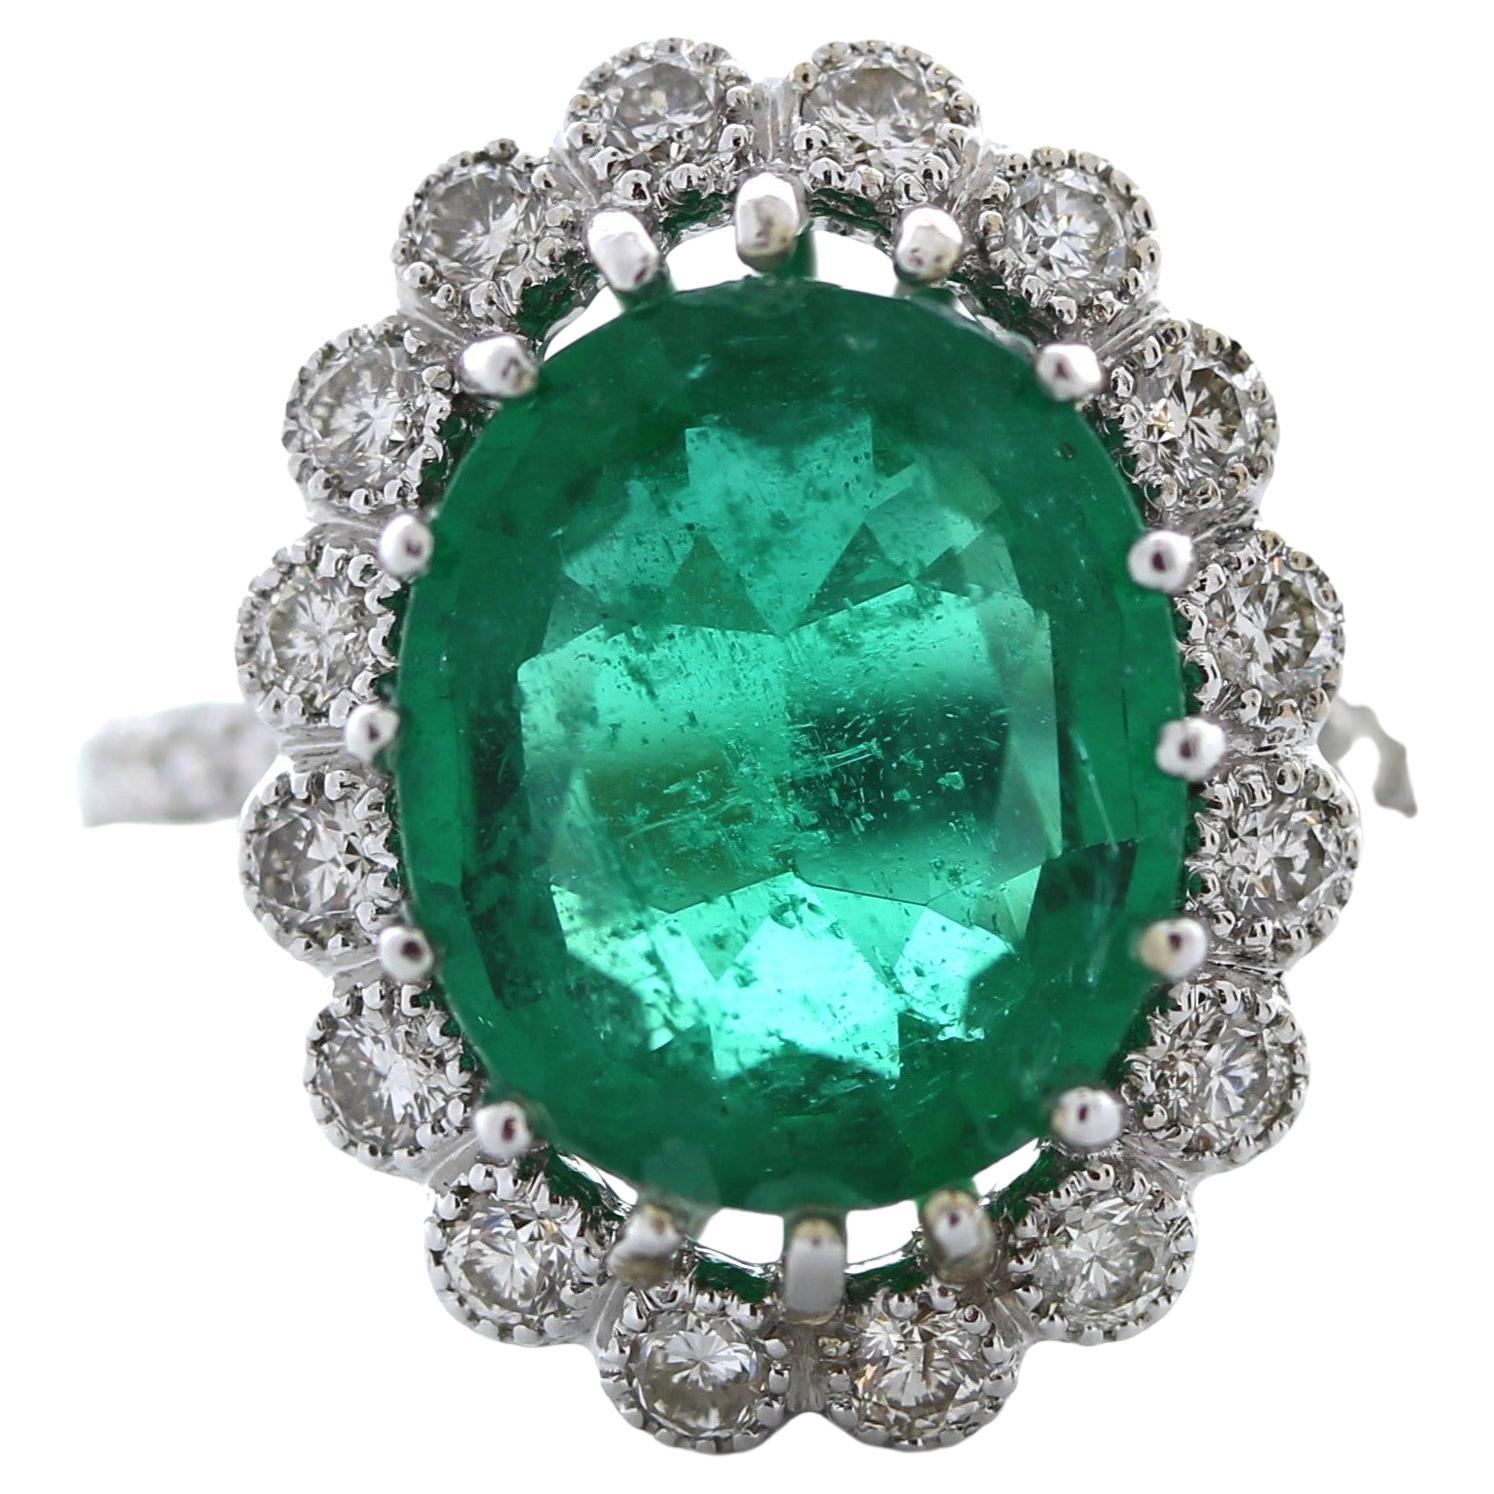 4.46 Carat Green Emerald Oval Shape & Diamond Ring in 14k White Gold